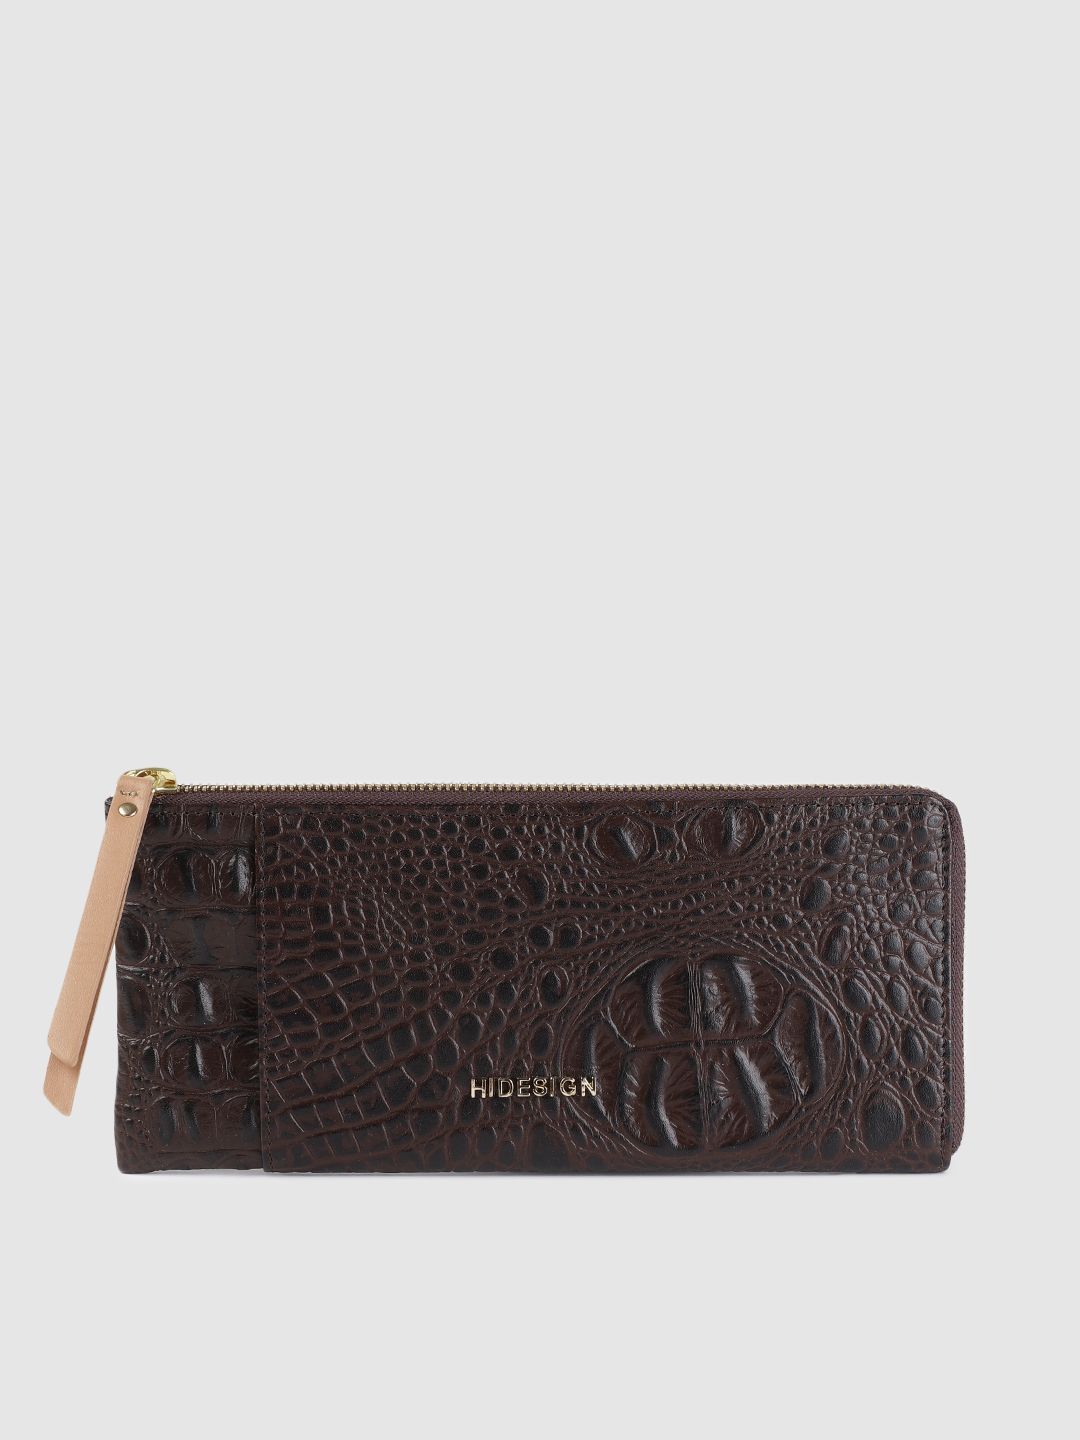 Hidesign Women Brown Croc Textured Leather Zip Around Wallet Price in India